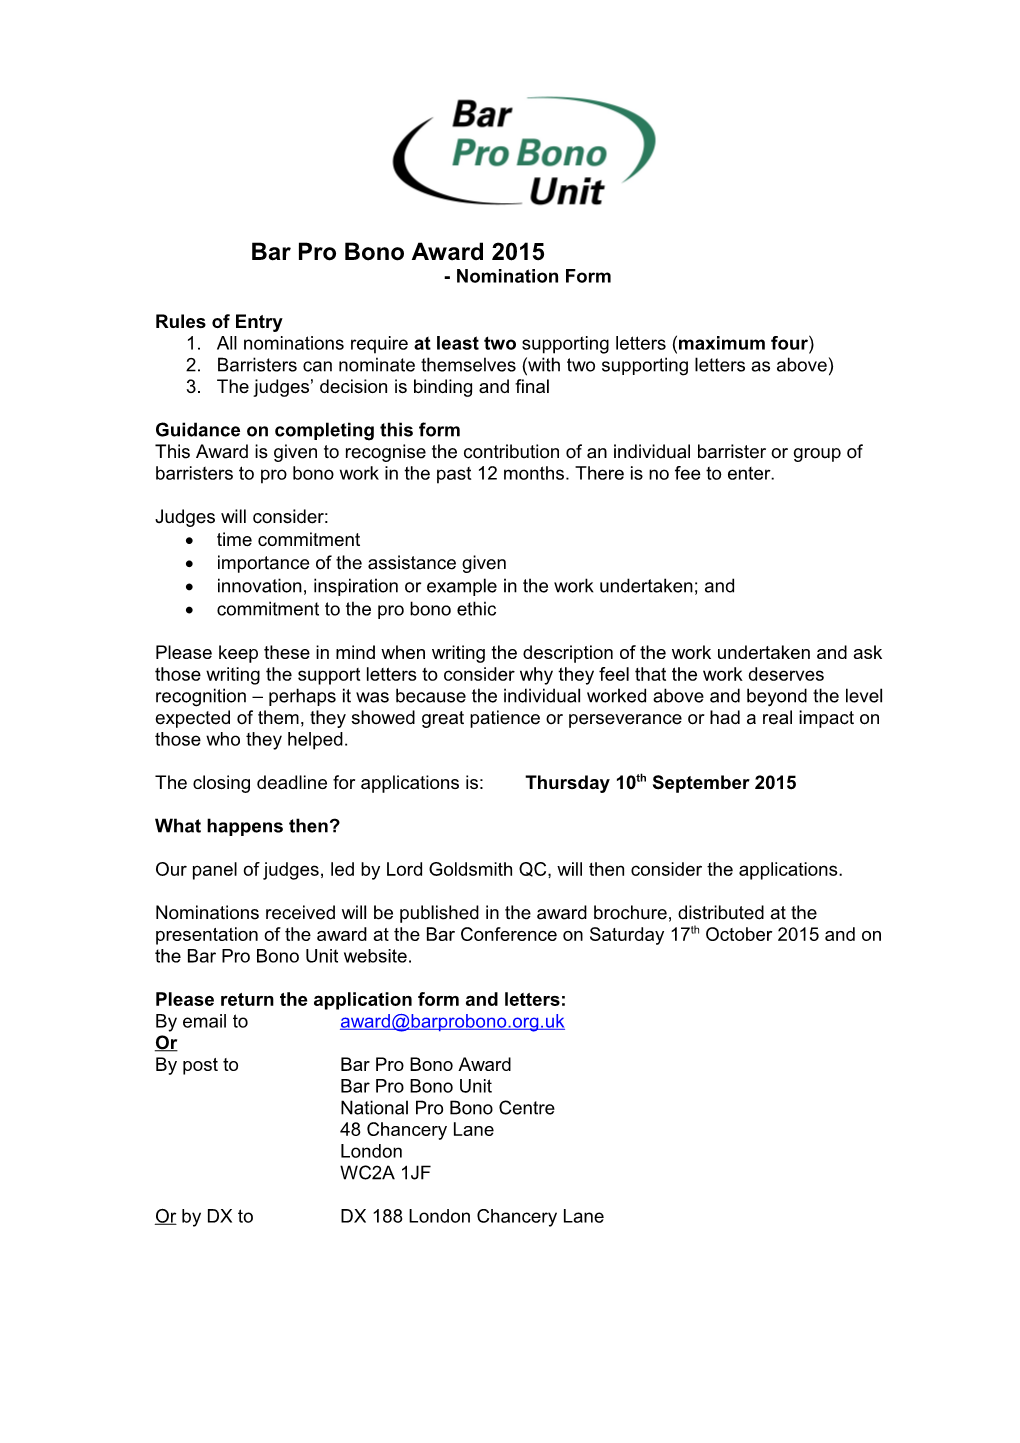 Nominations Form Bar Pro Bono Award 2009